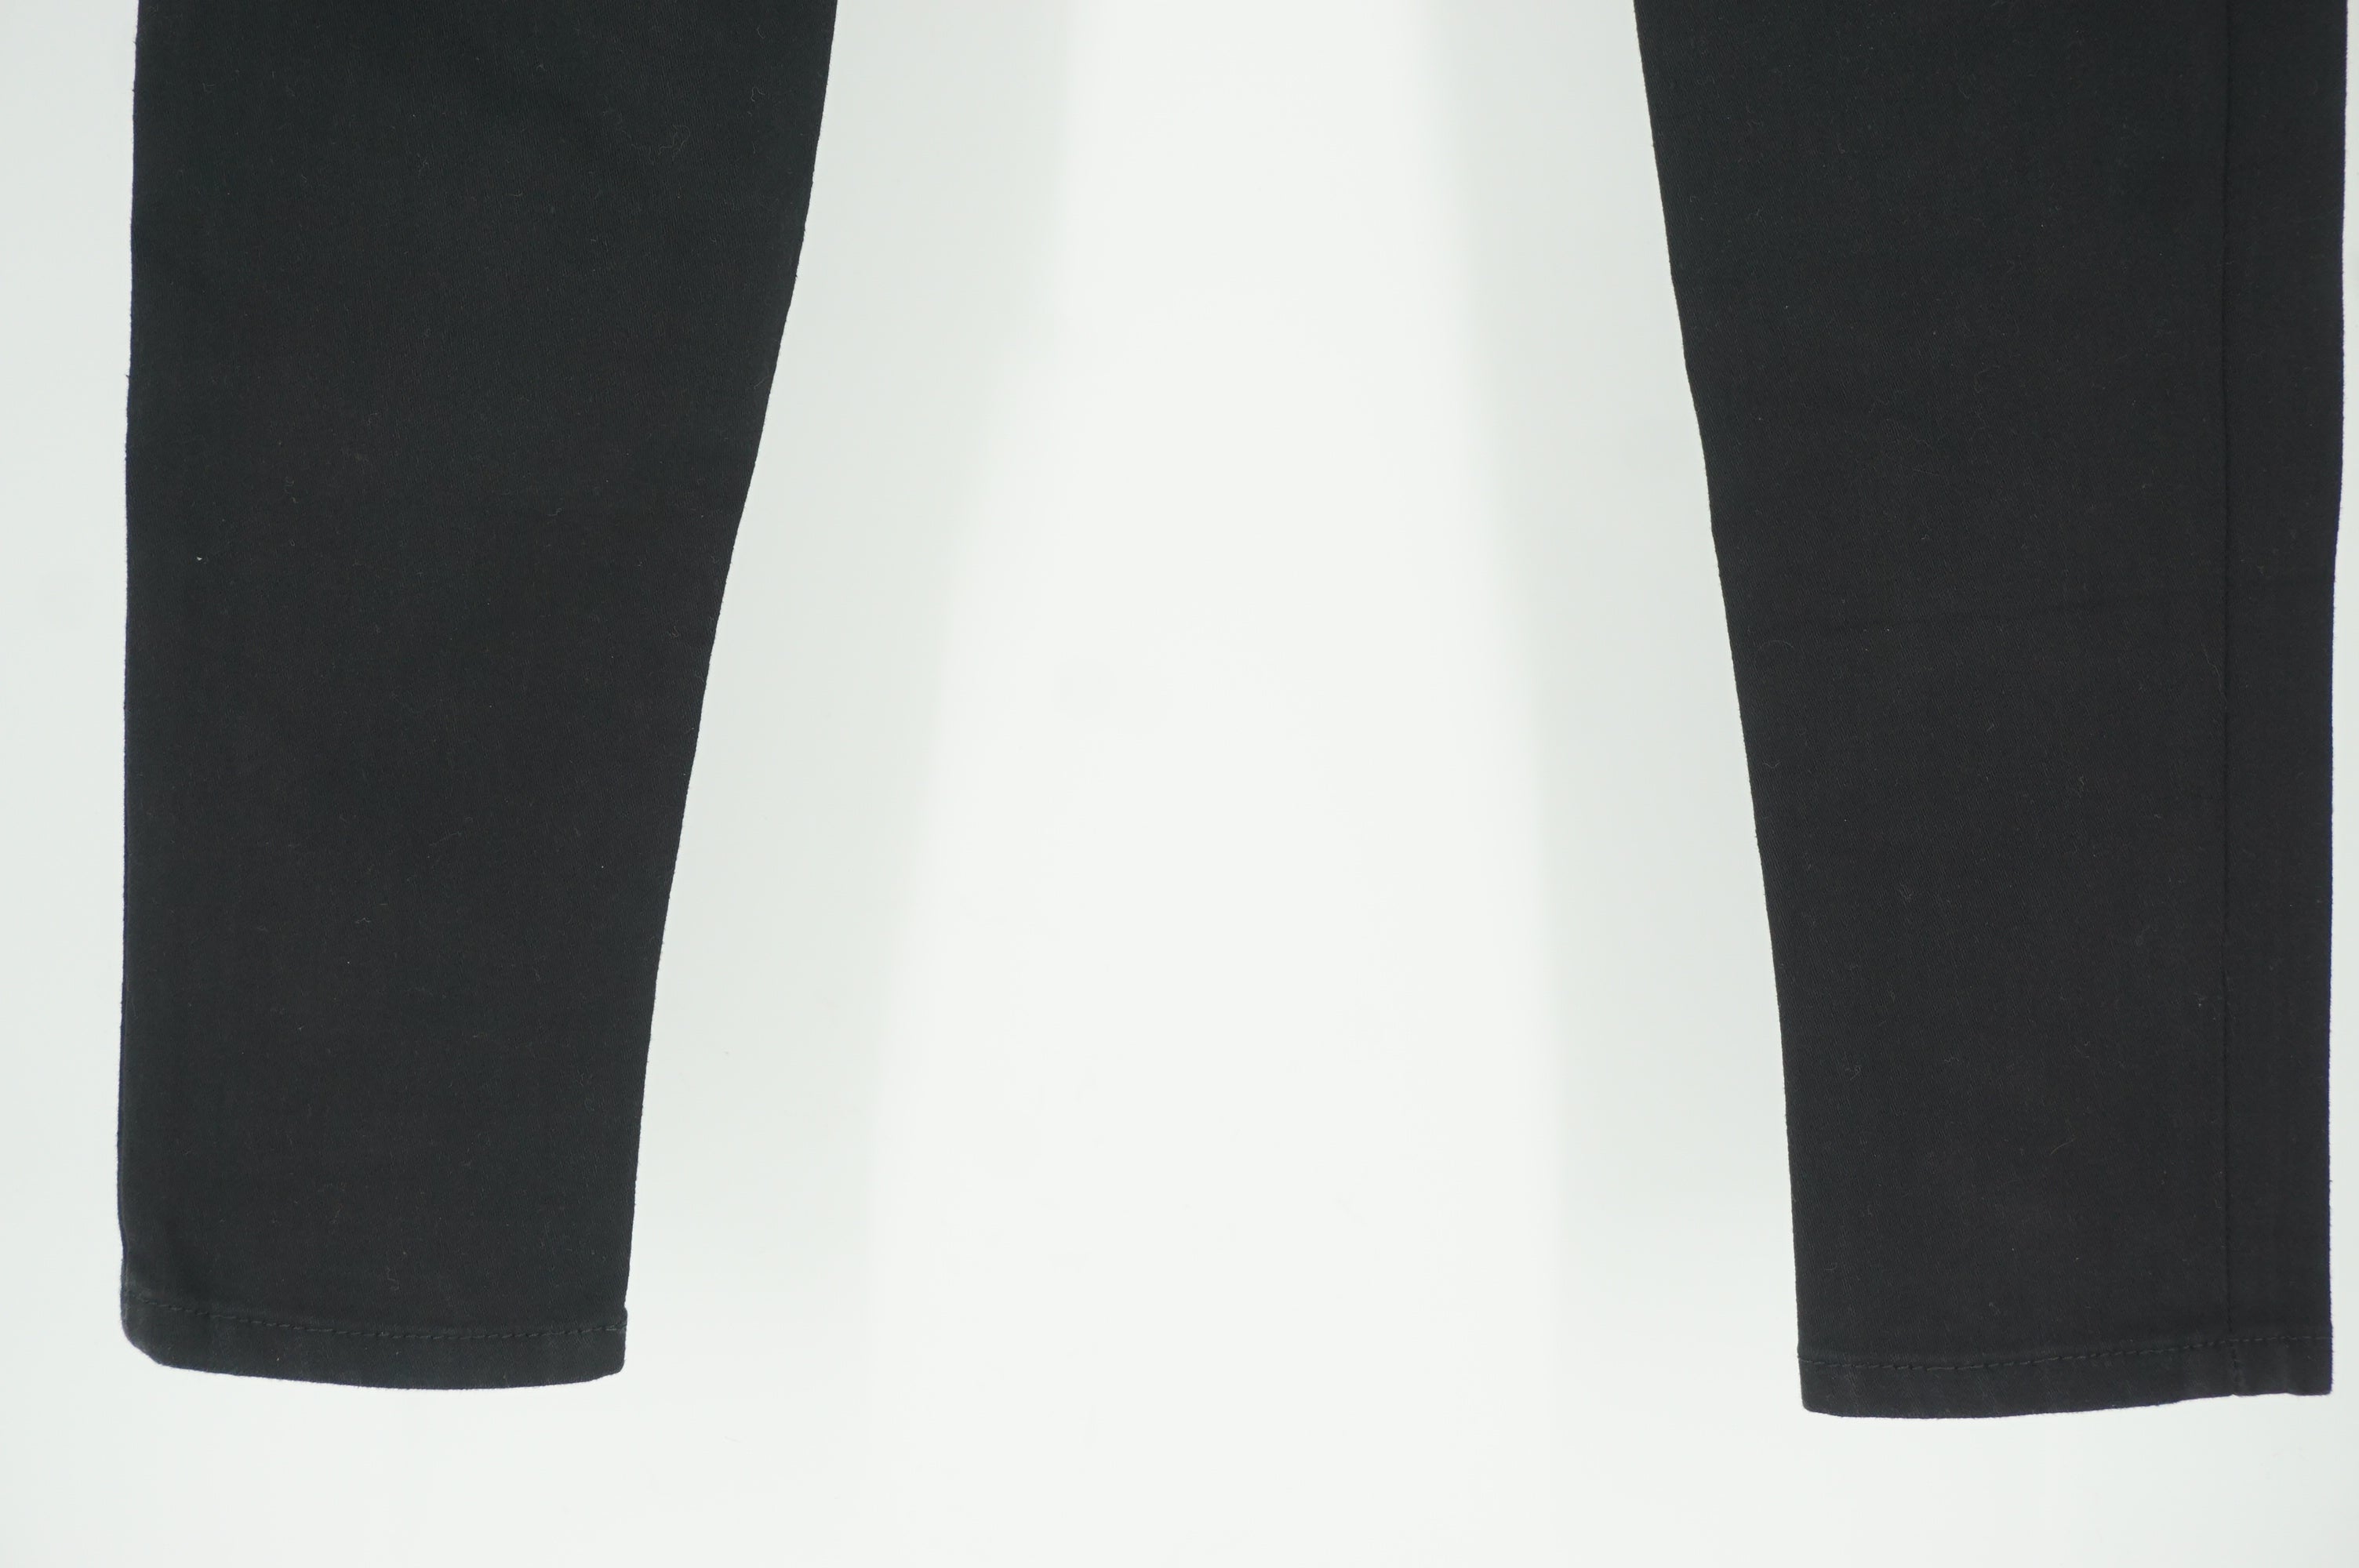 Joe's Jeans Black Denim Skinny Pants size 25 NWT $169